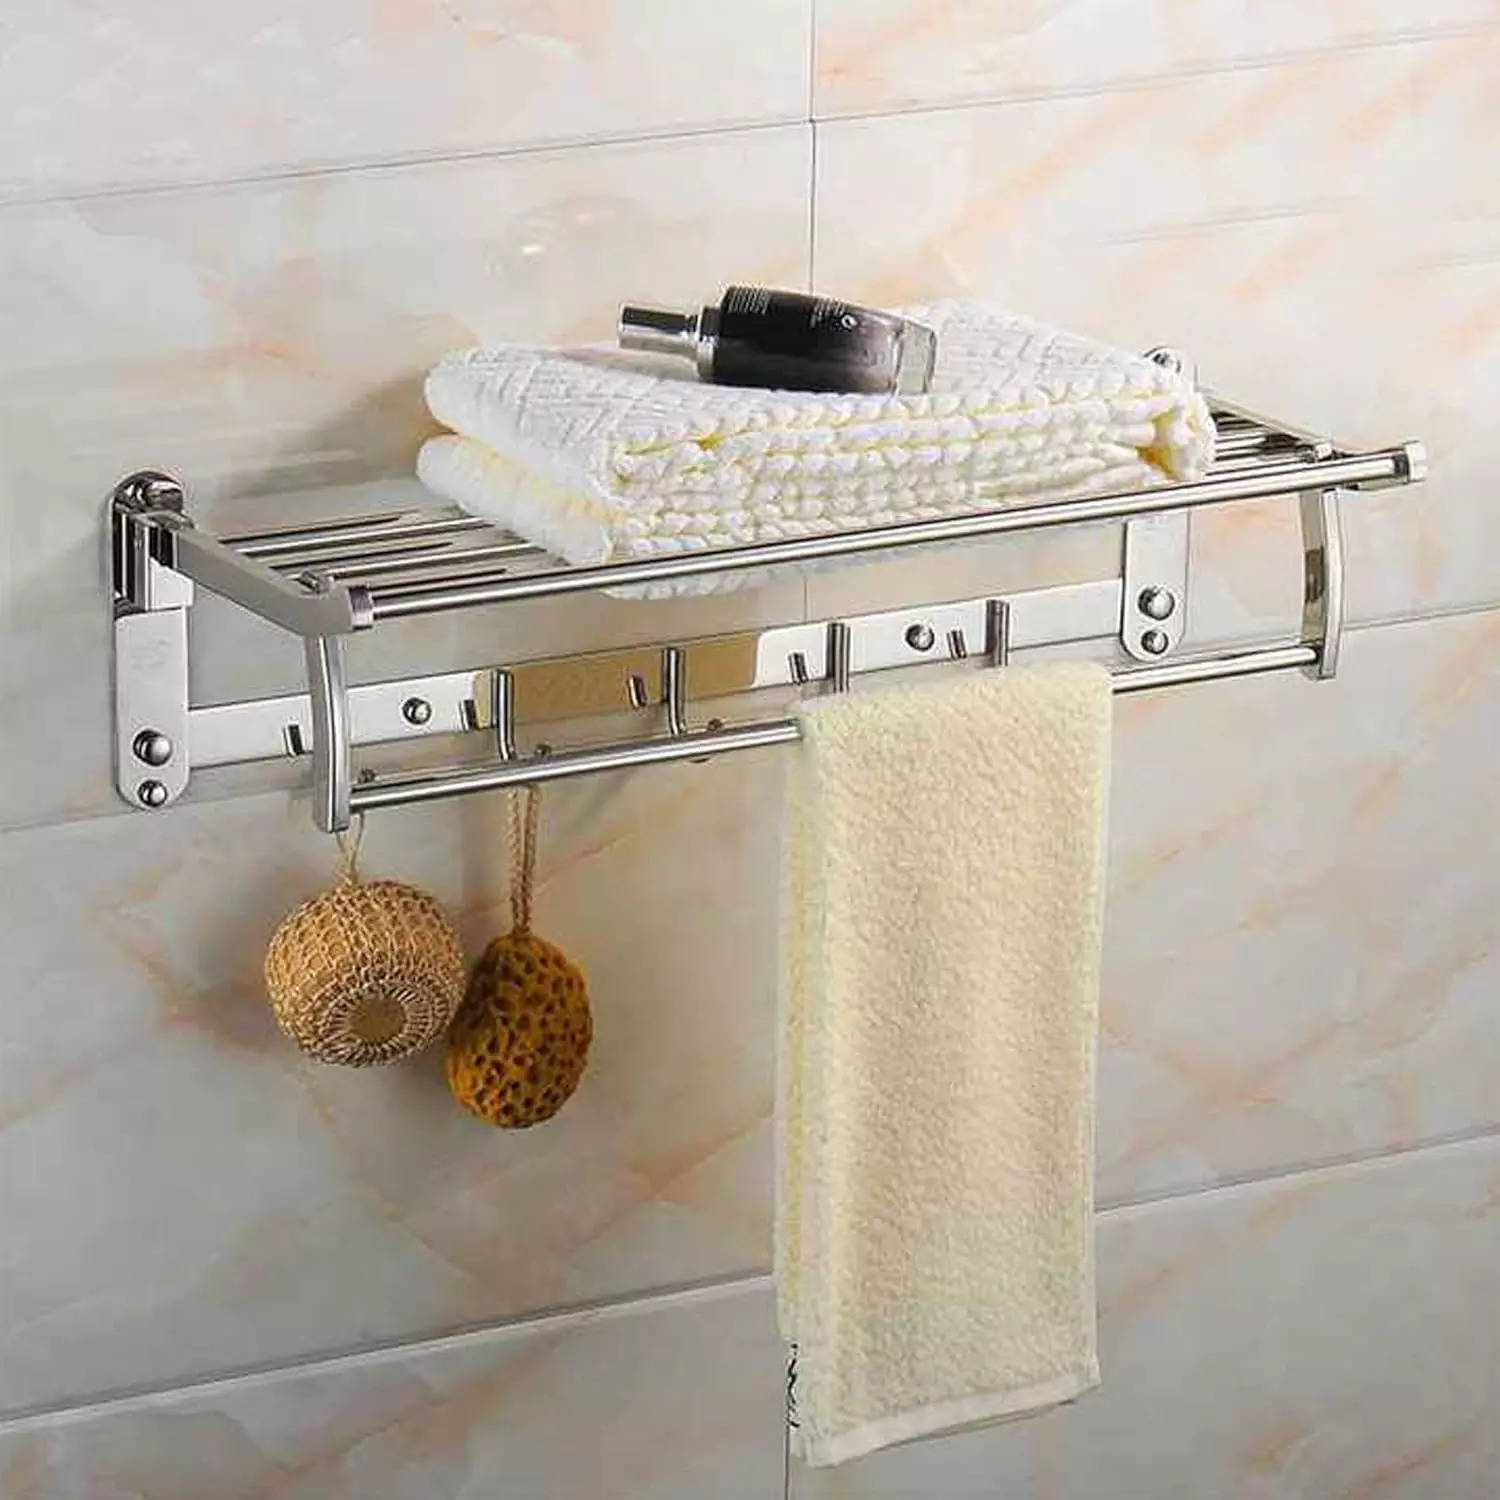 10 Exceptional Towel Bars Under 1000: Budget-Friendly Bathroom Upgrades:Image